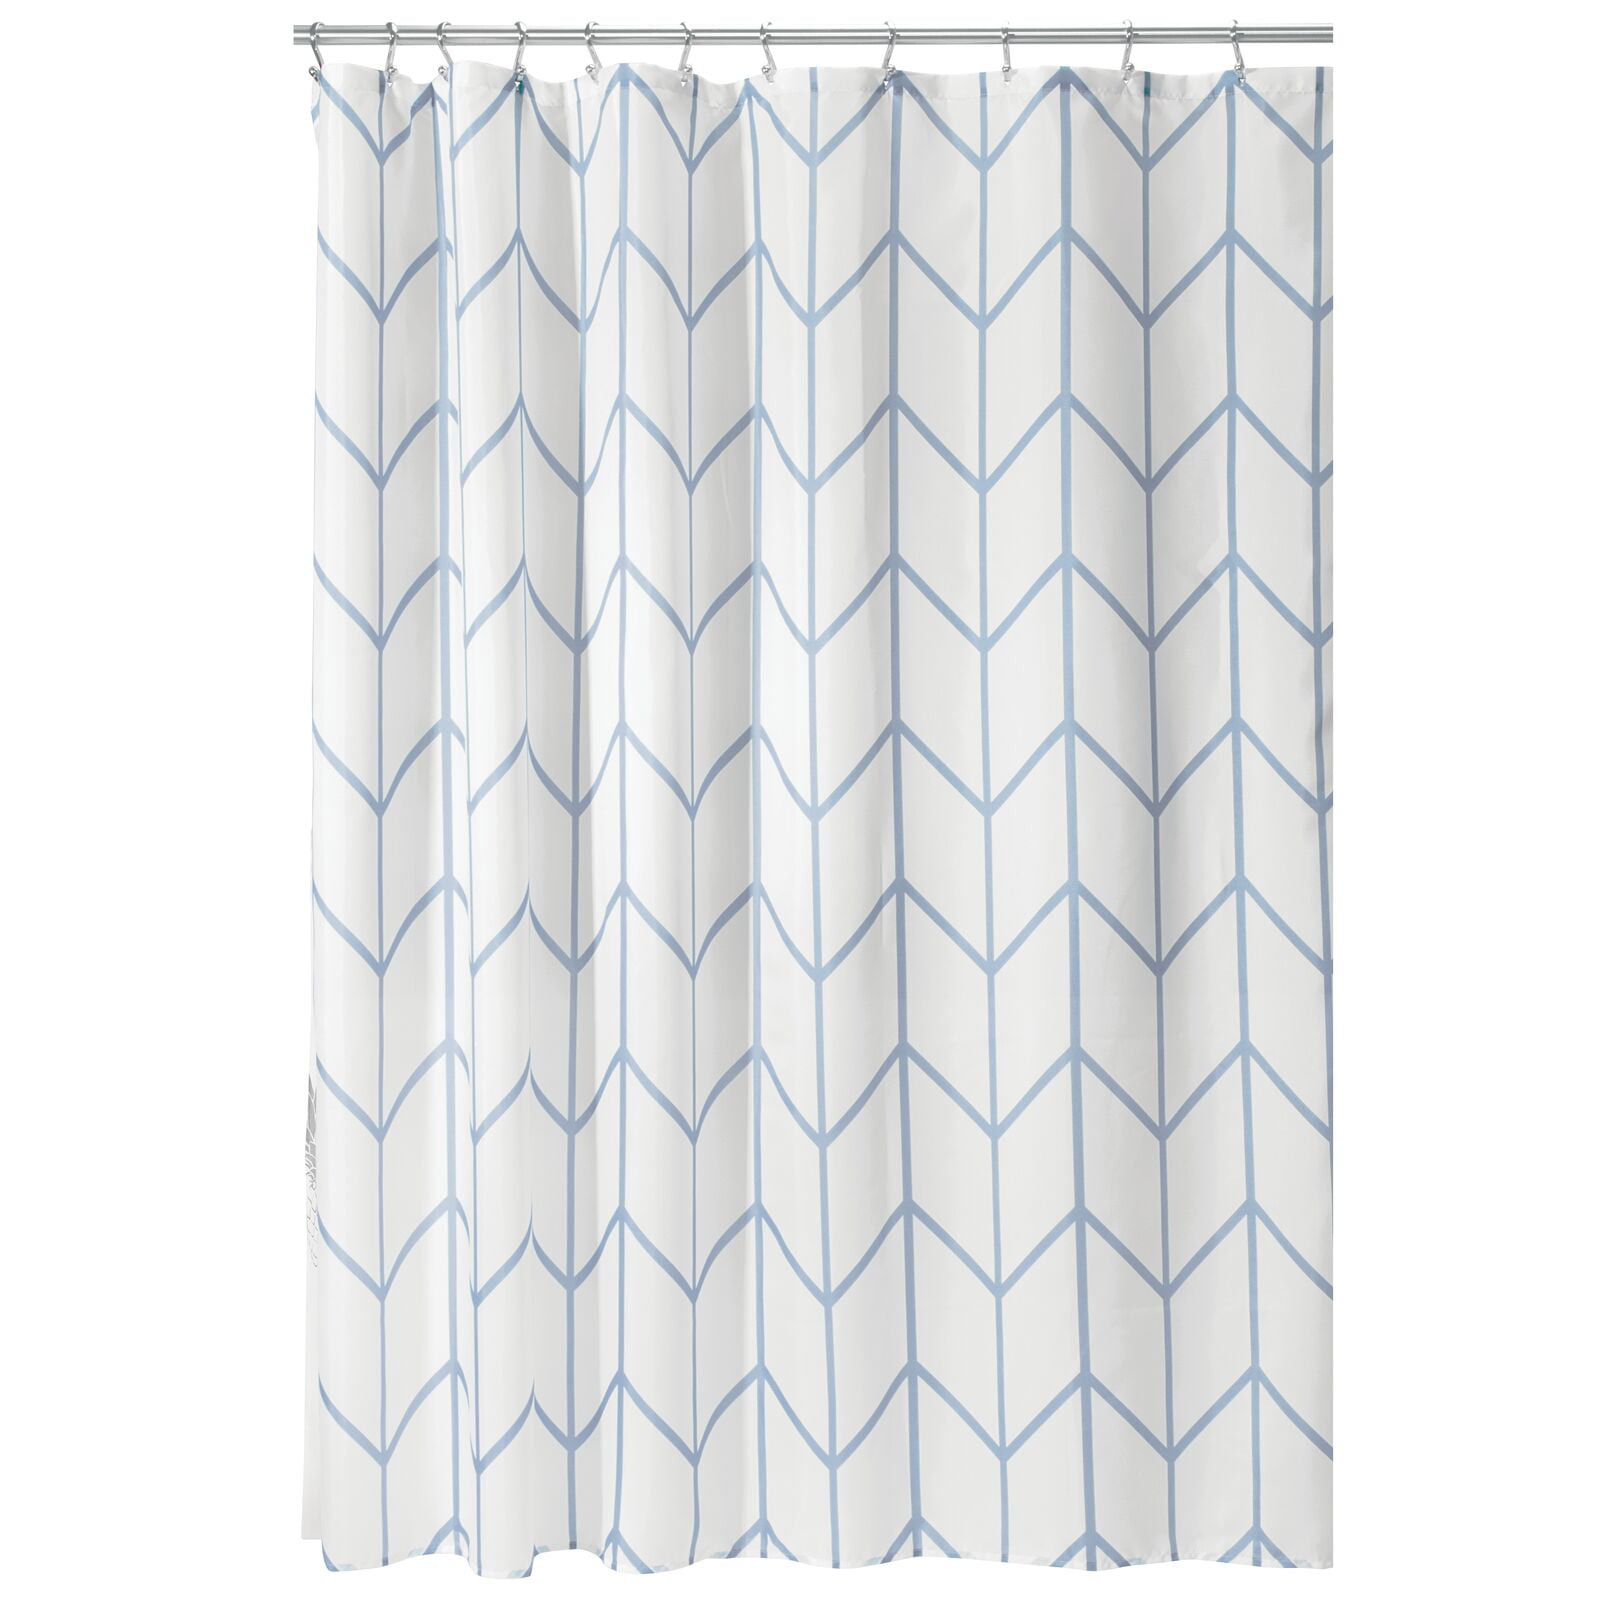 mDesign Diamond Fabric Shower Curtain 72 x 72 Gold/Metallic